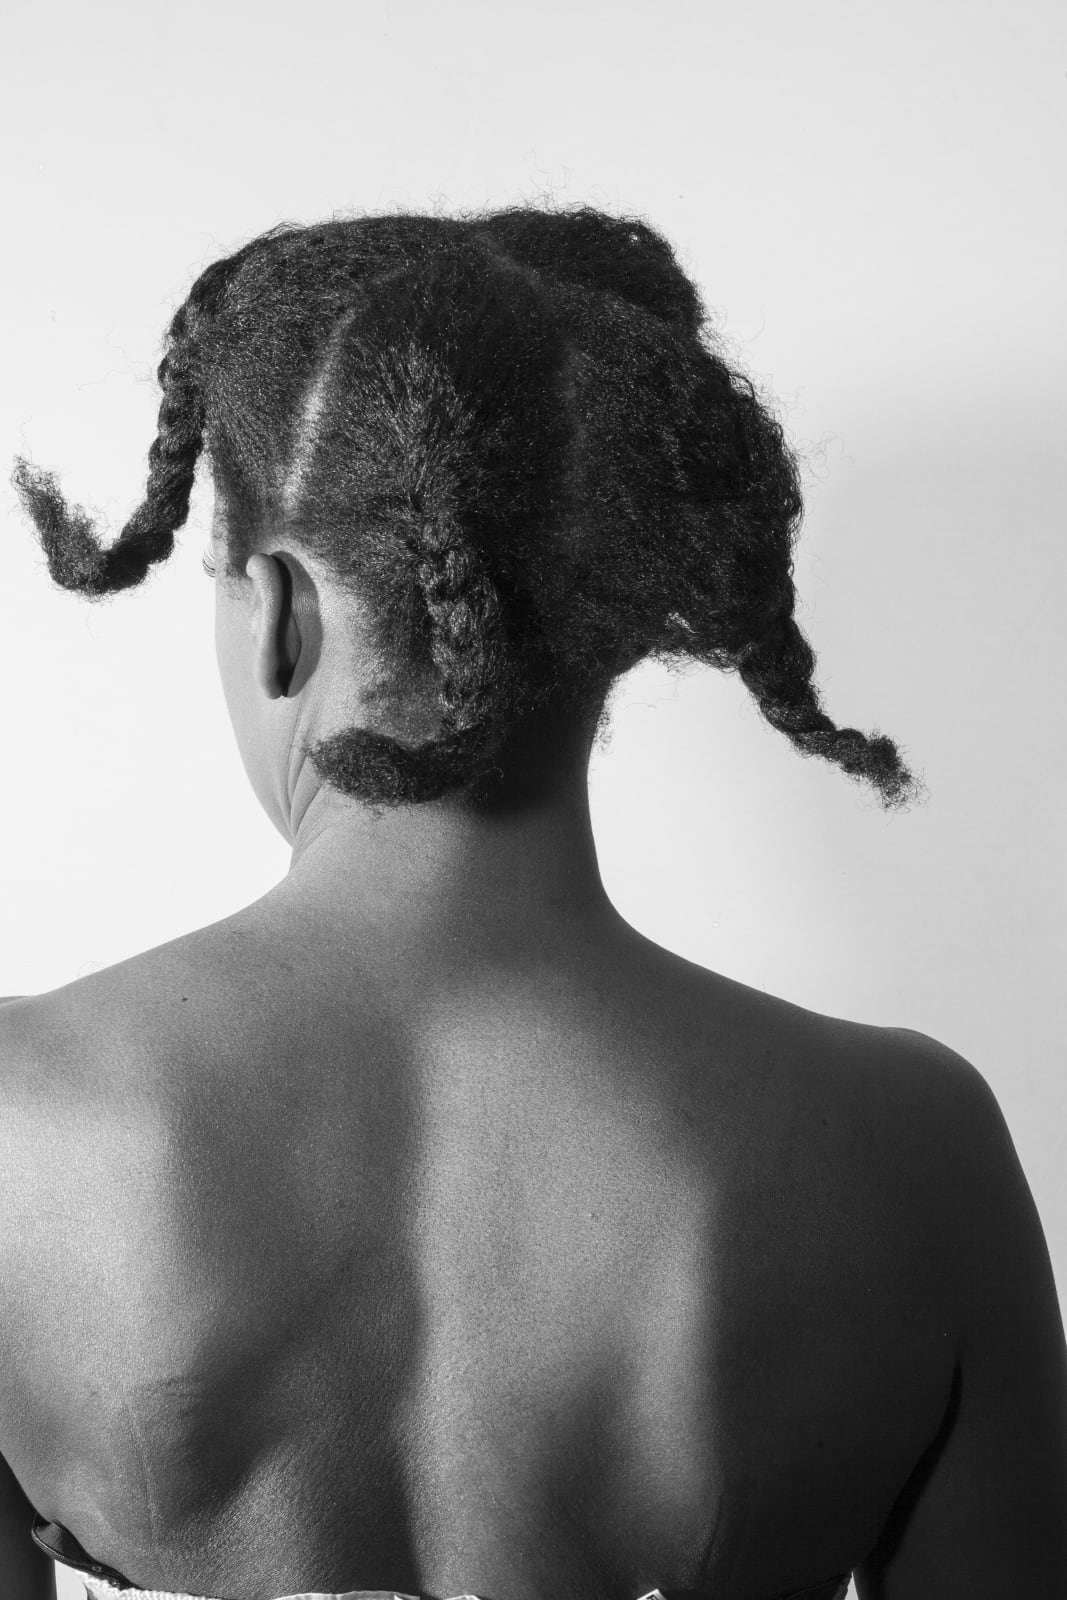 Adama Delphine Fawundu, Néku, Hair is apolitical #14, 2017